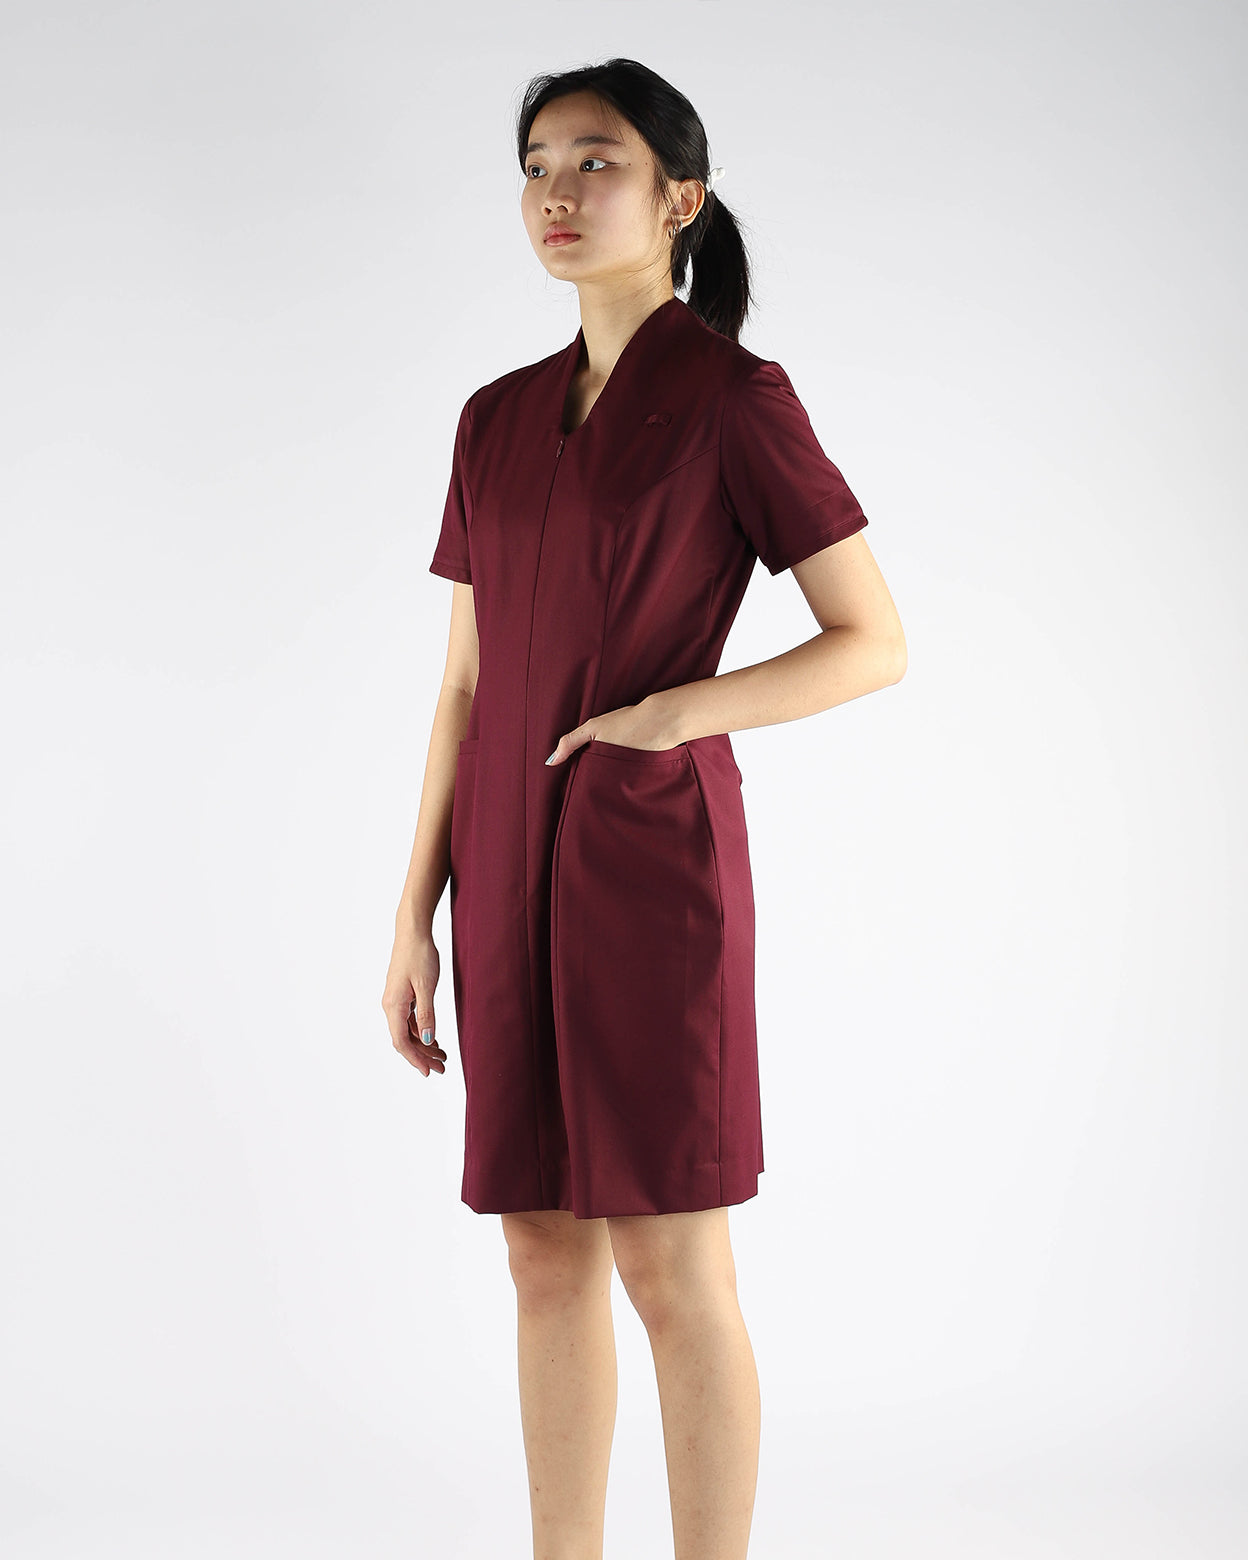 Red Staff Nurse Dress